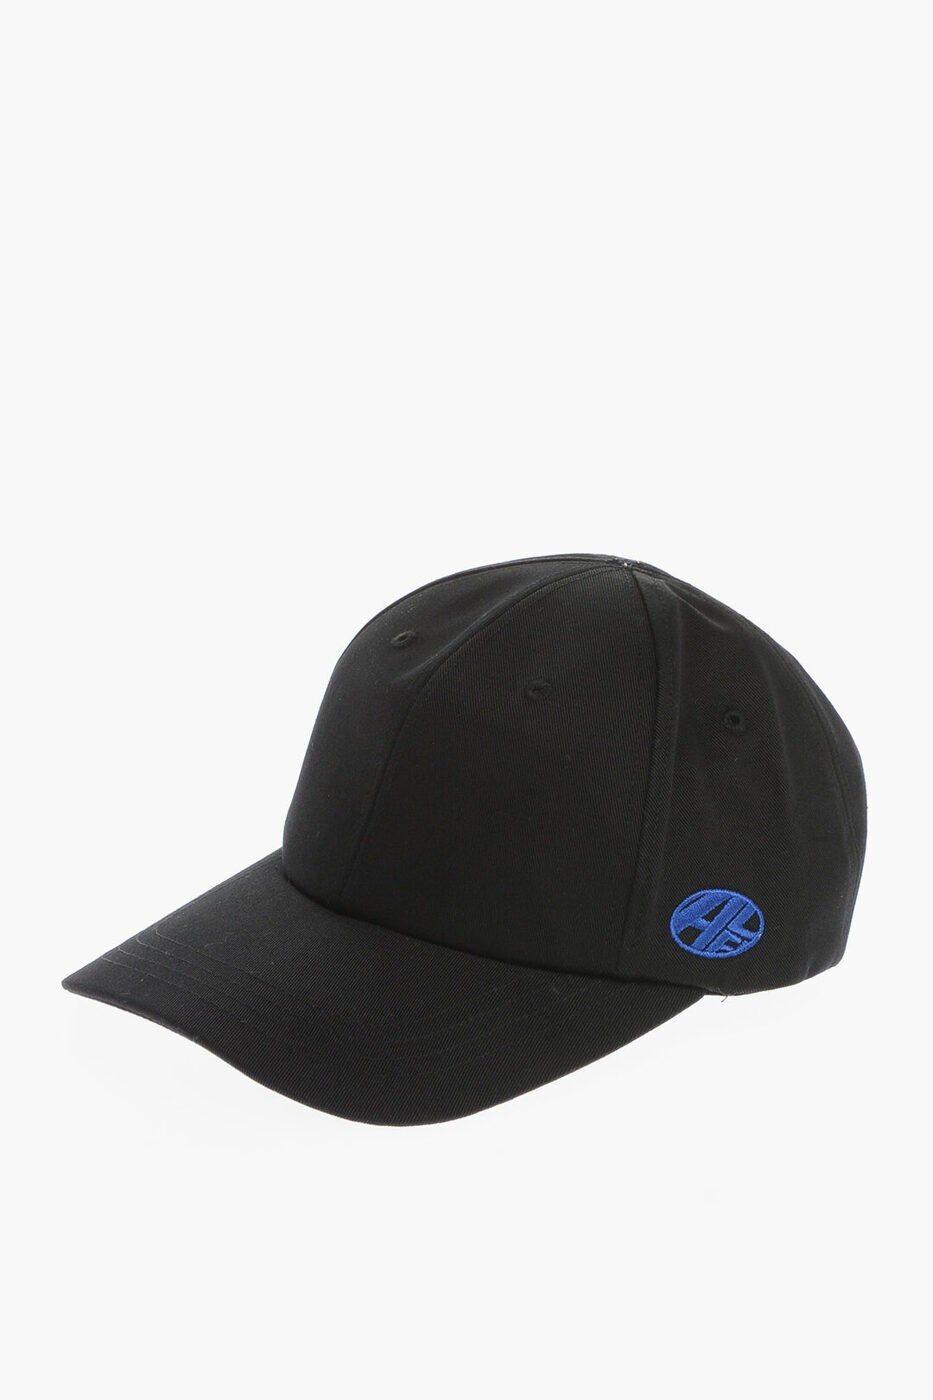  ADER ERROR アーダーエラー 帽子 BLASSCA08BKCO BLACK メンズ COTTON TWILL BASEBALL CAP  dk